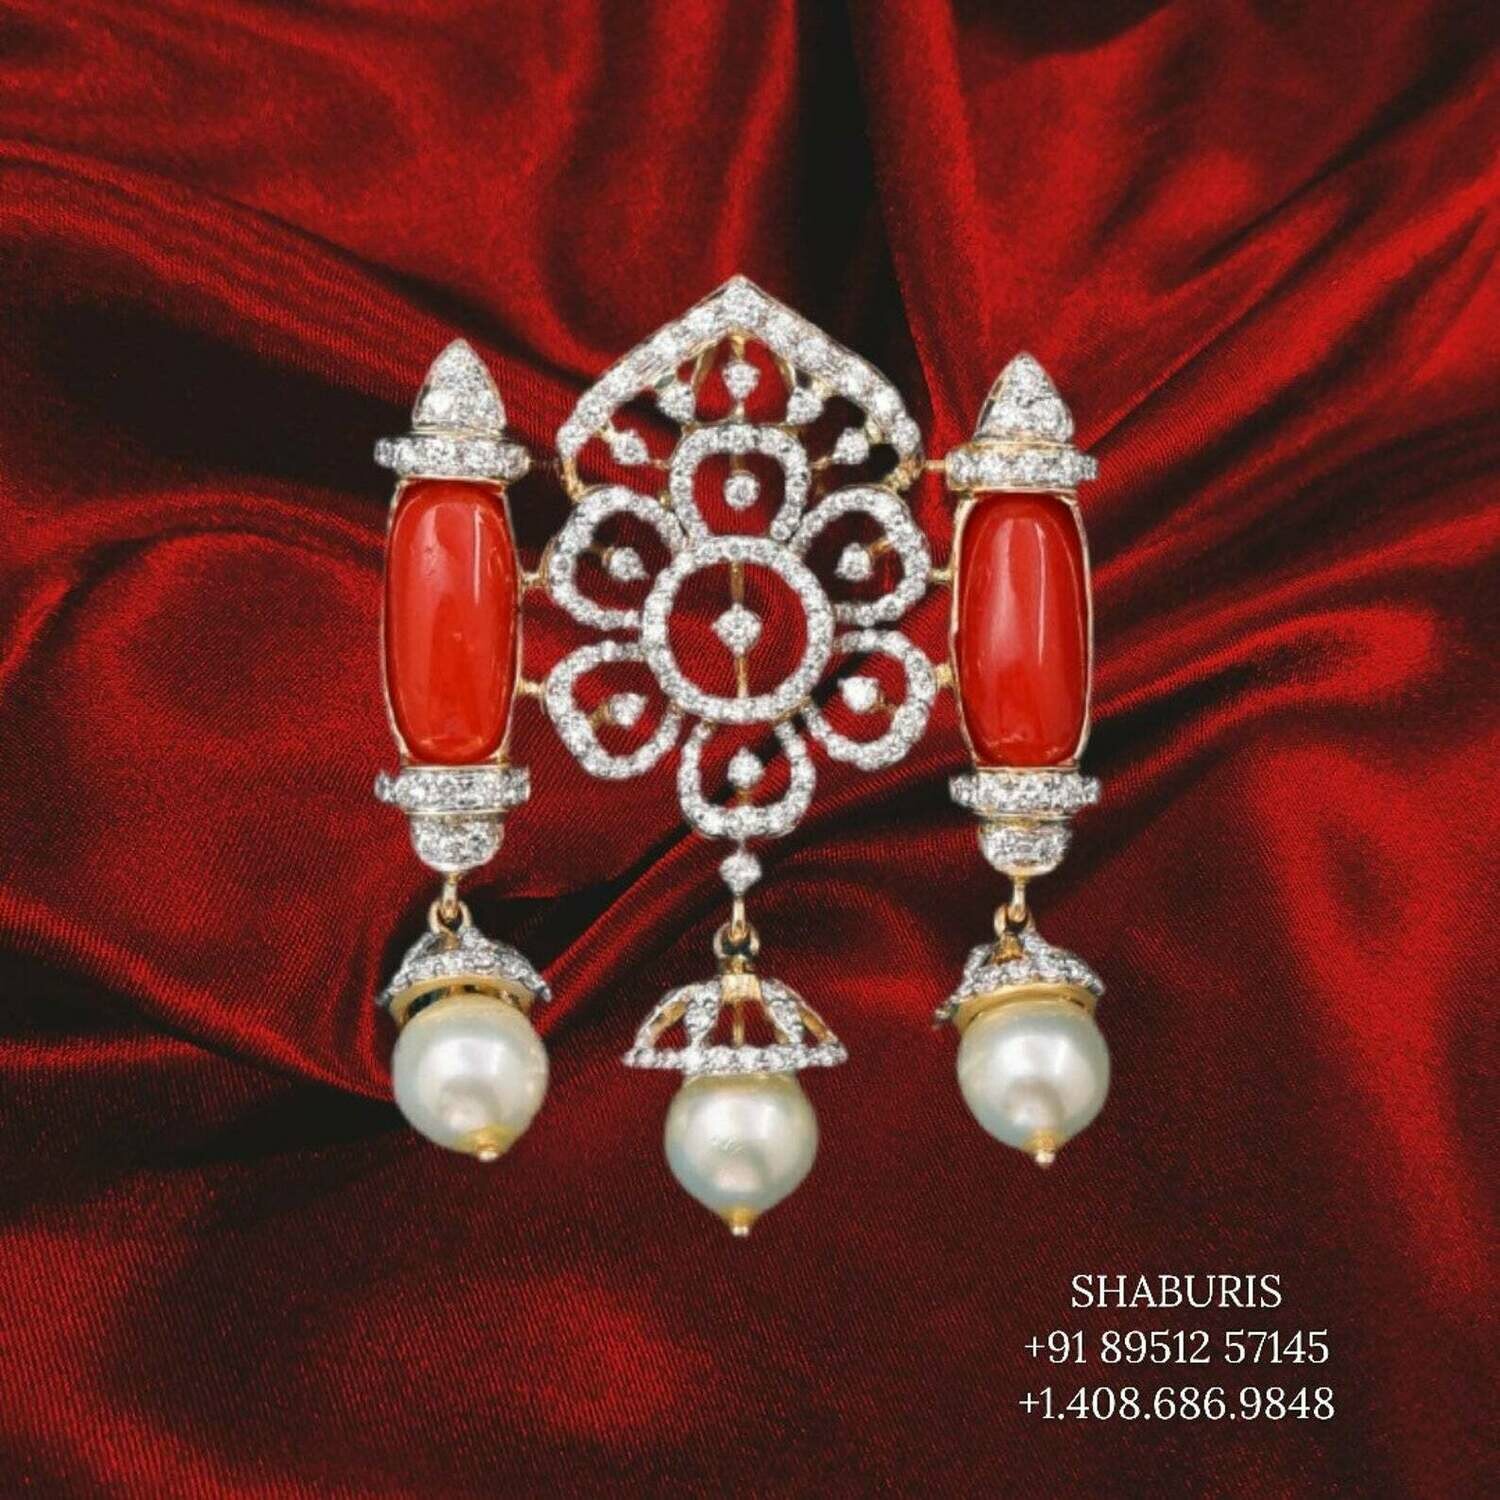 Latest Indian Jewelry,Pure Silver jewelry Indian ,Coral pendant ,gold jewelry designs,Indian Wedding Jewelry-NIHIRA-SHABURIS